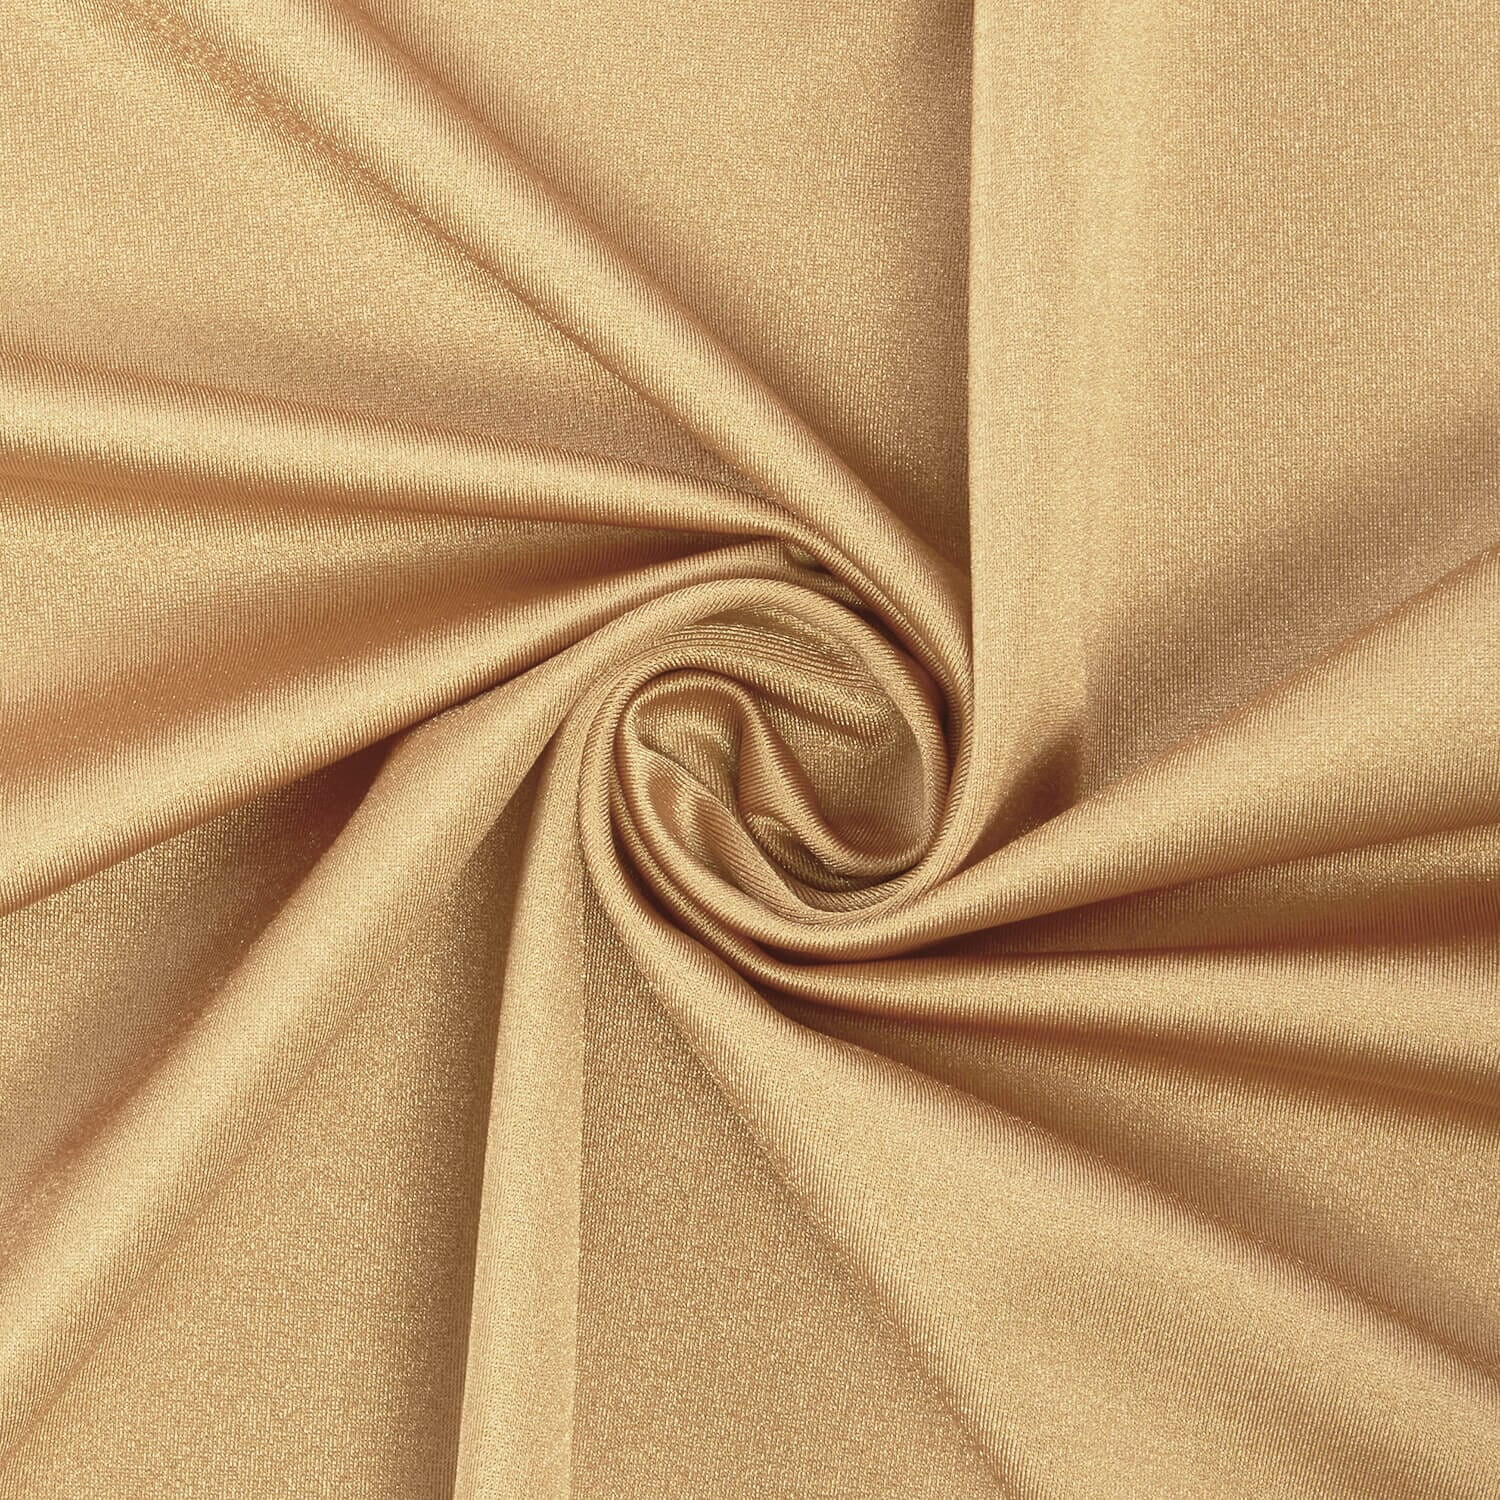 Shiny Milliskin Nylon Spandex Fabric 4 Way Stretch 58 wide Sold